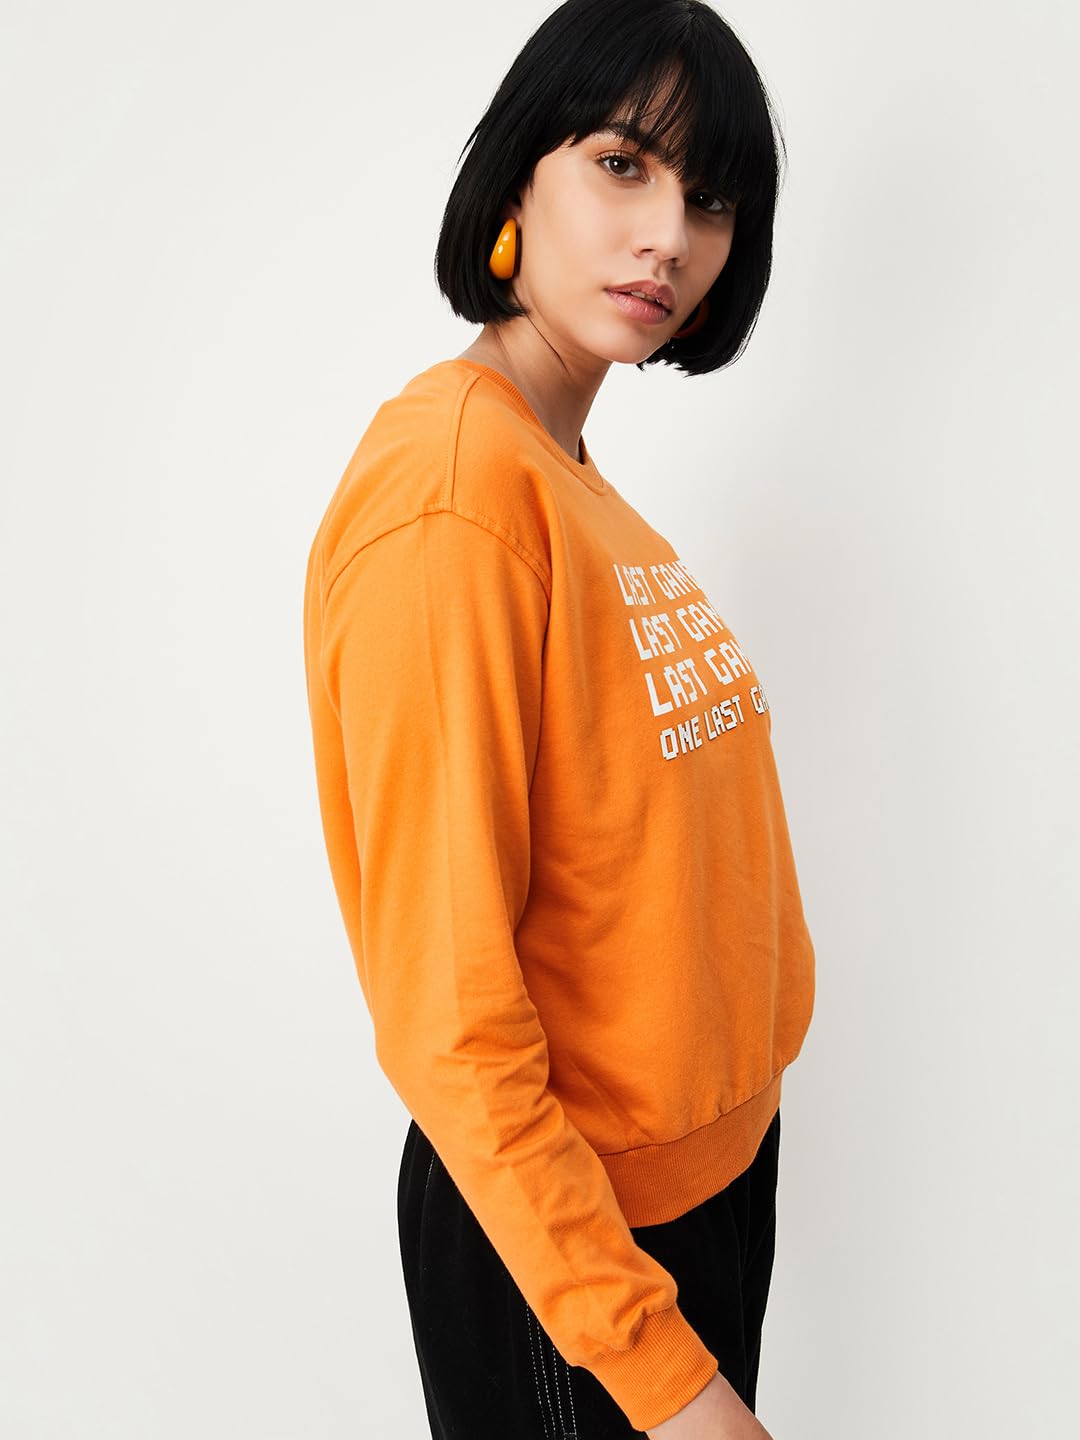 Max Women Typographic Printed Sweatshirt,Orange,S